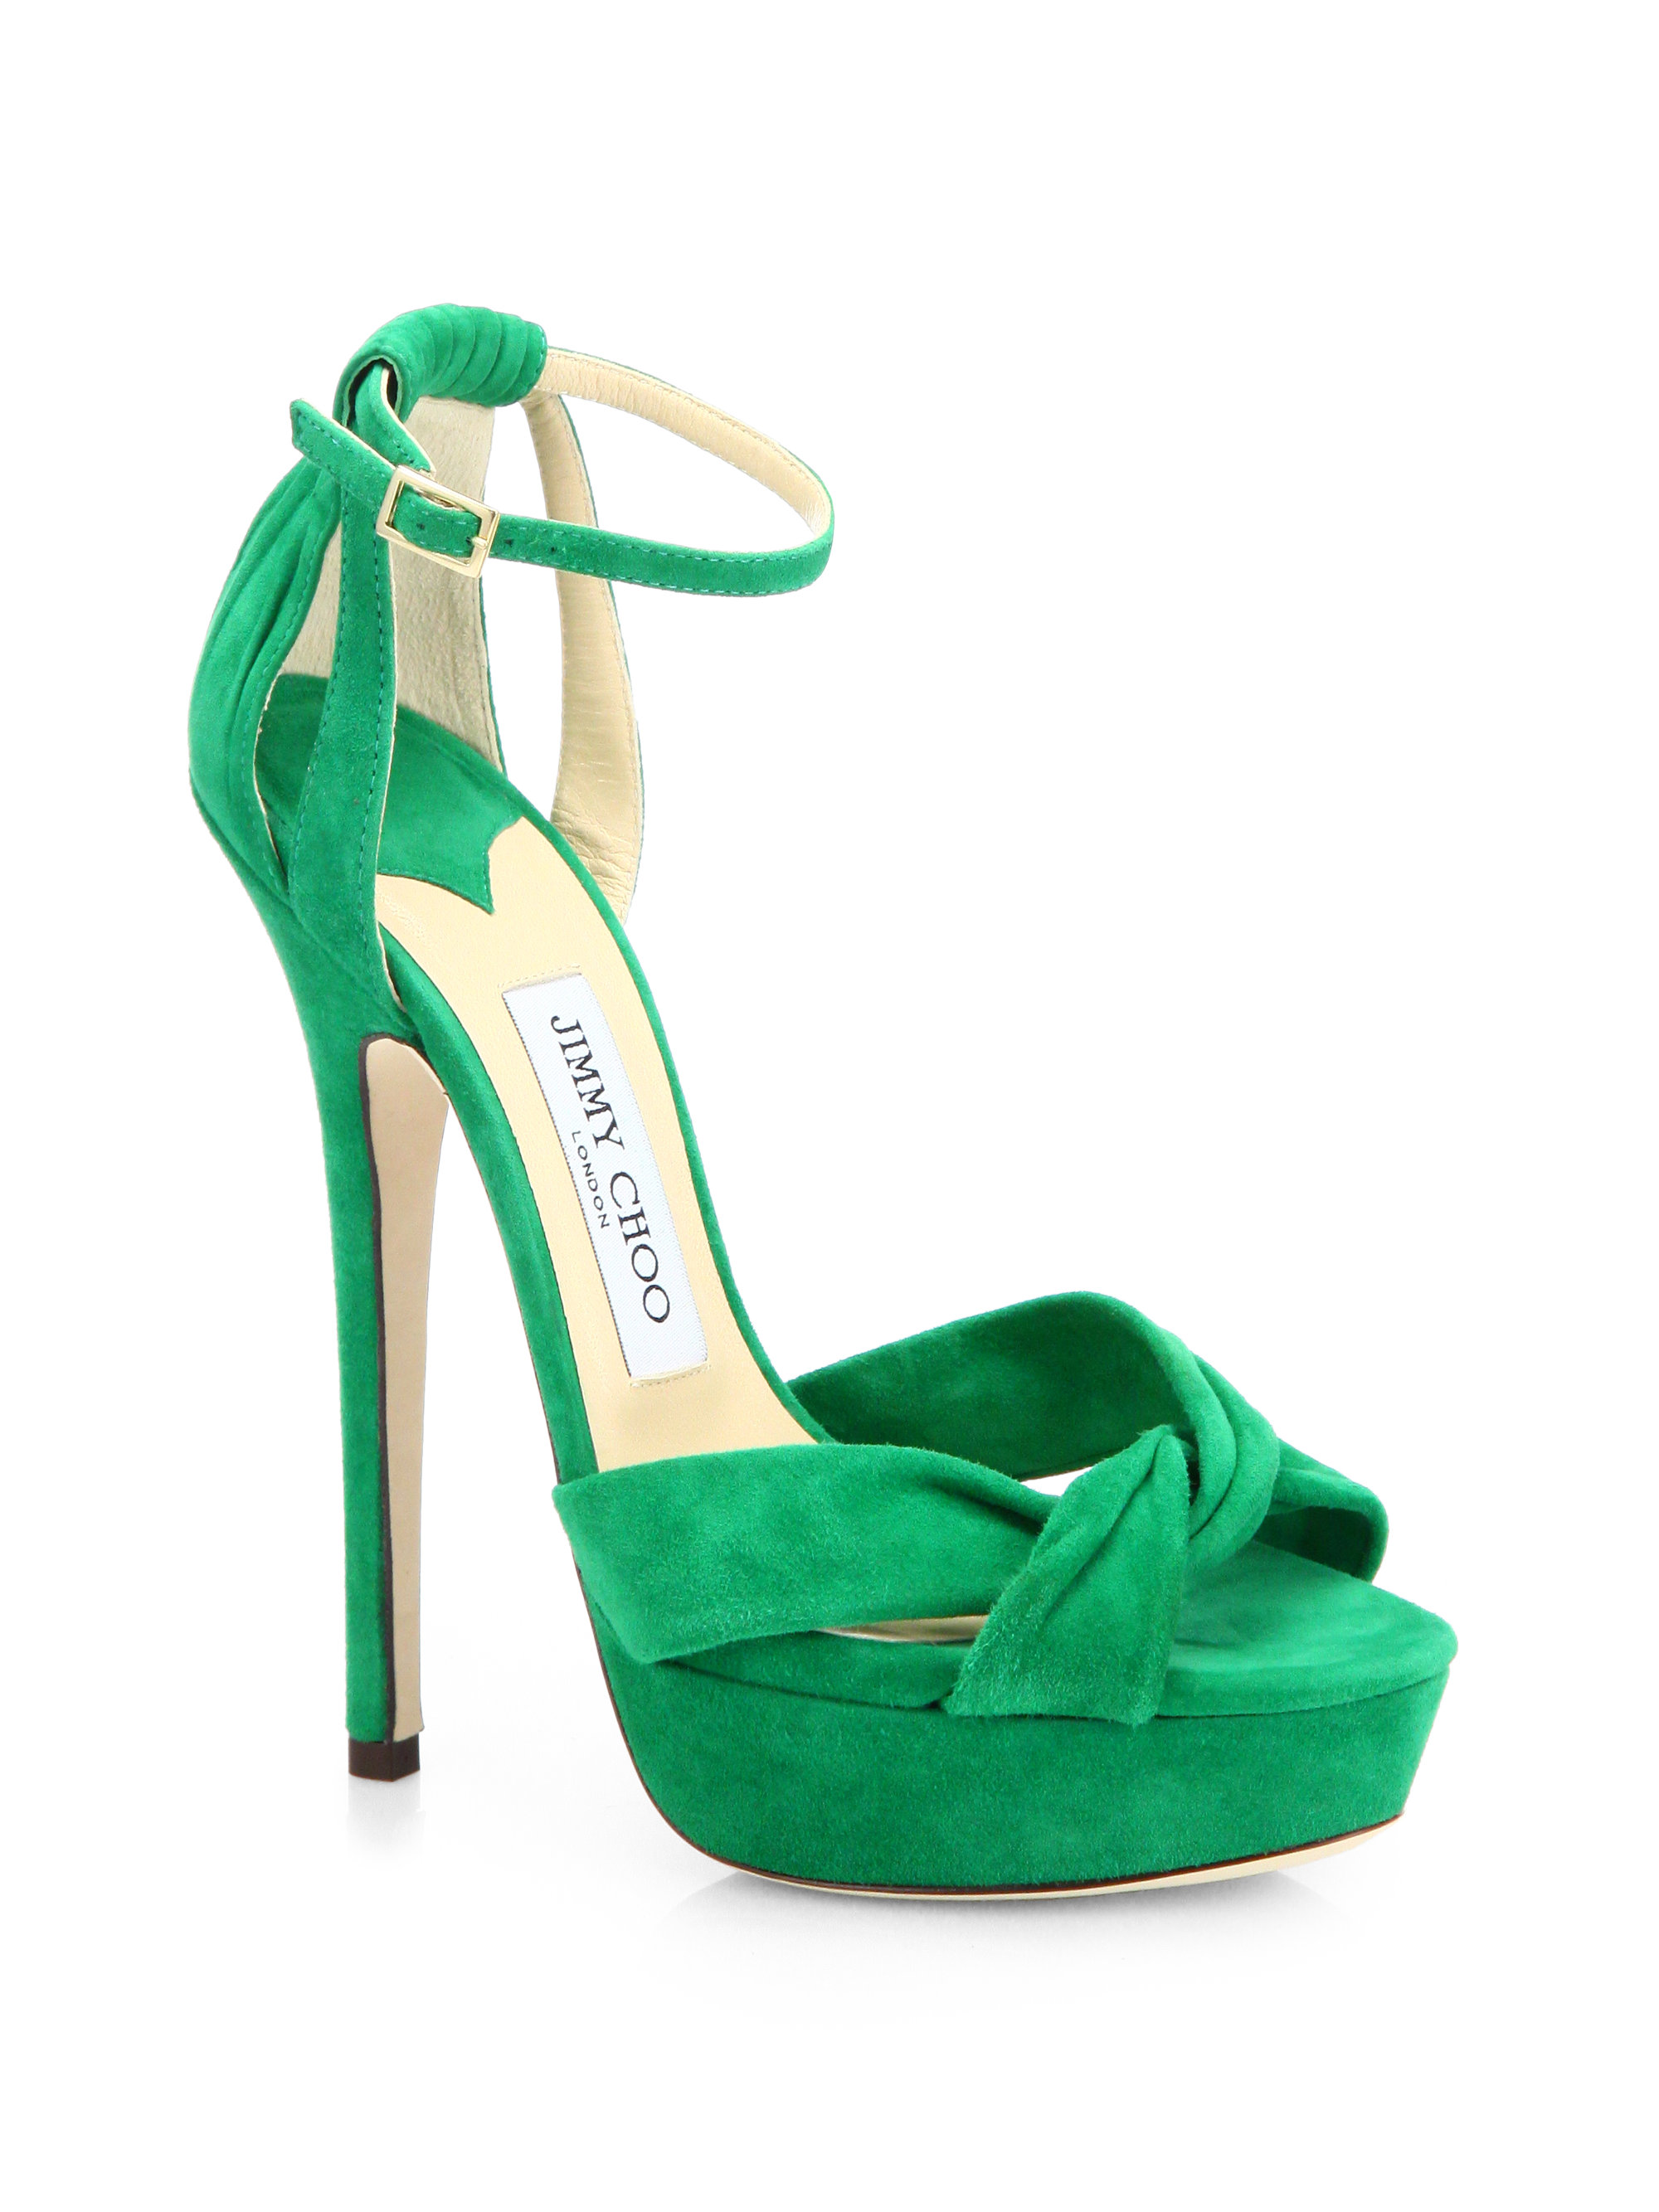 emerald green suede pumps